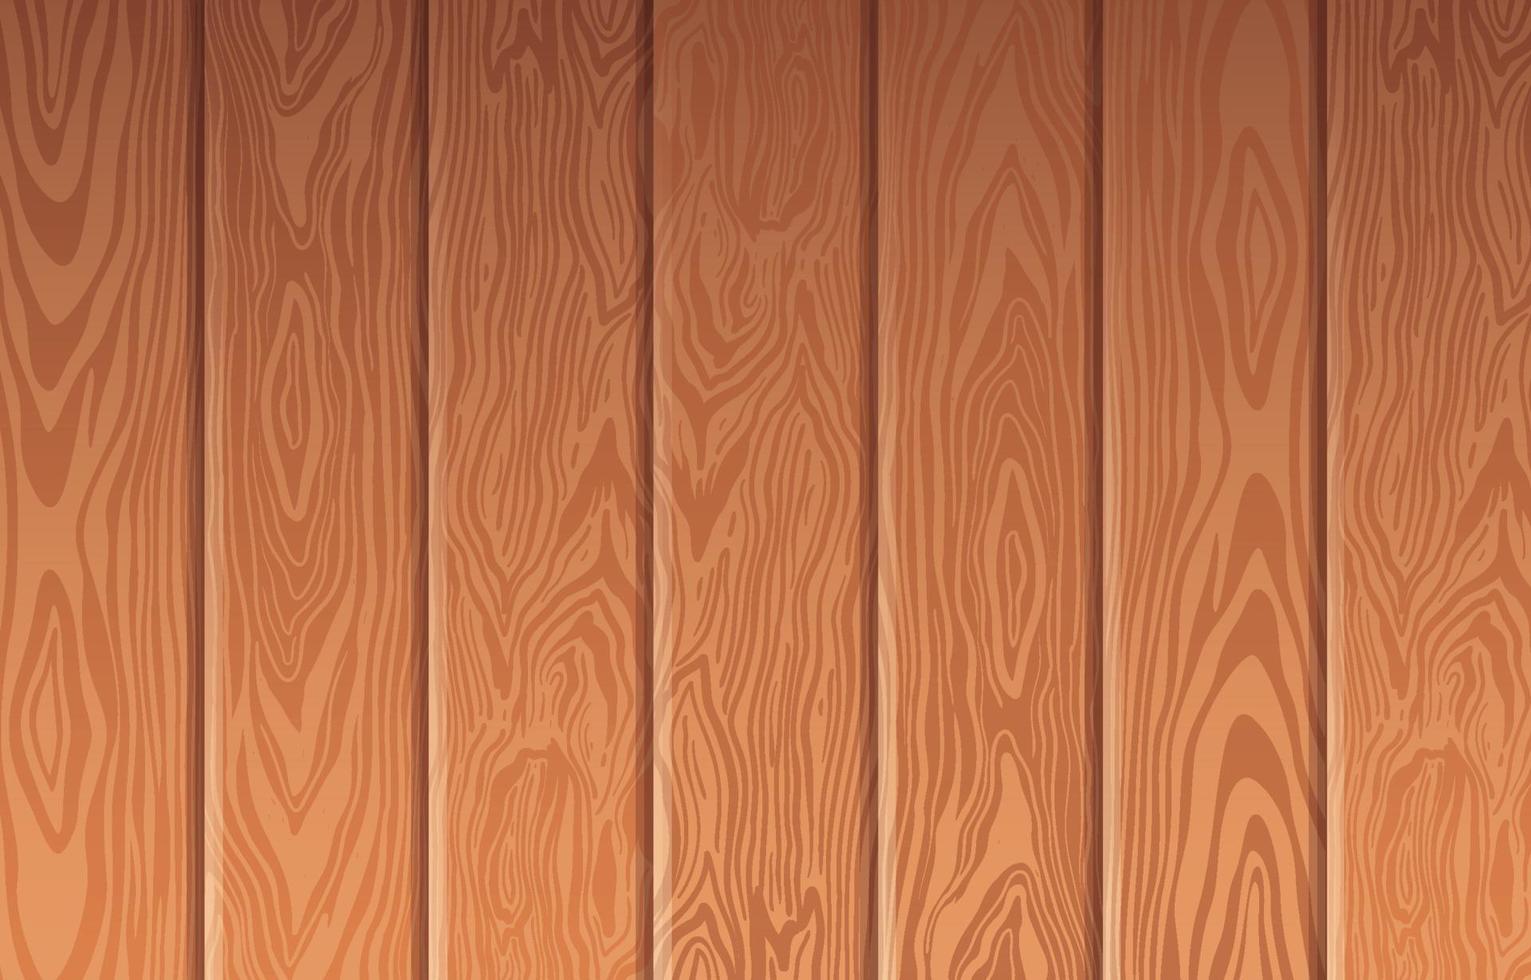 Plank Woods Background vector